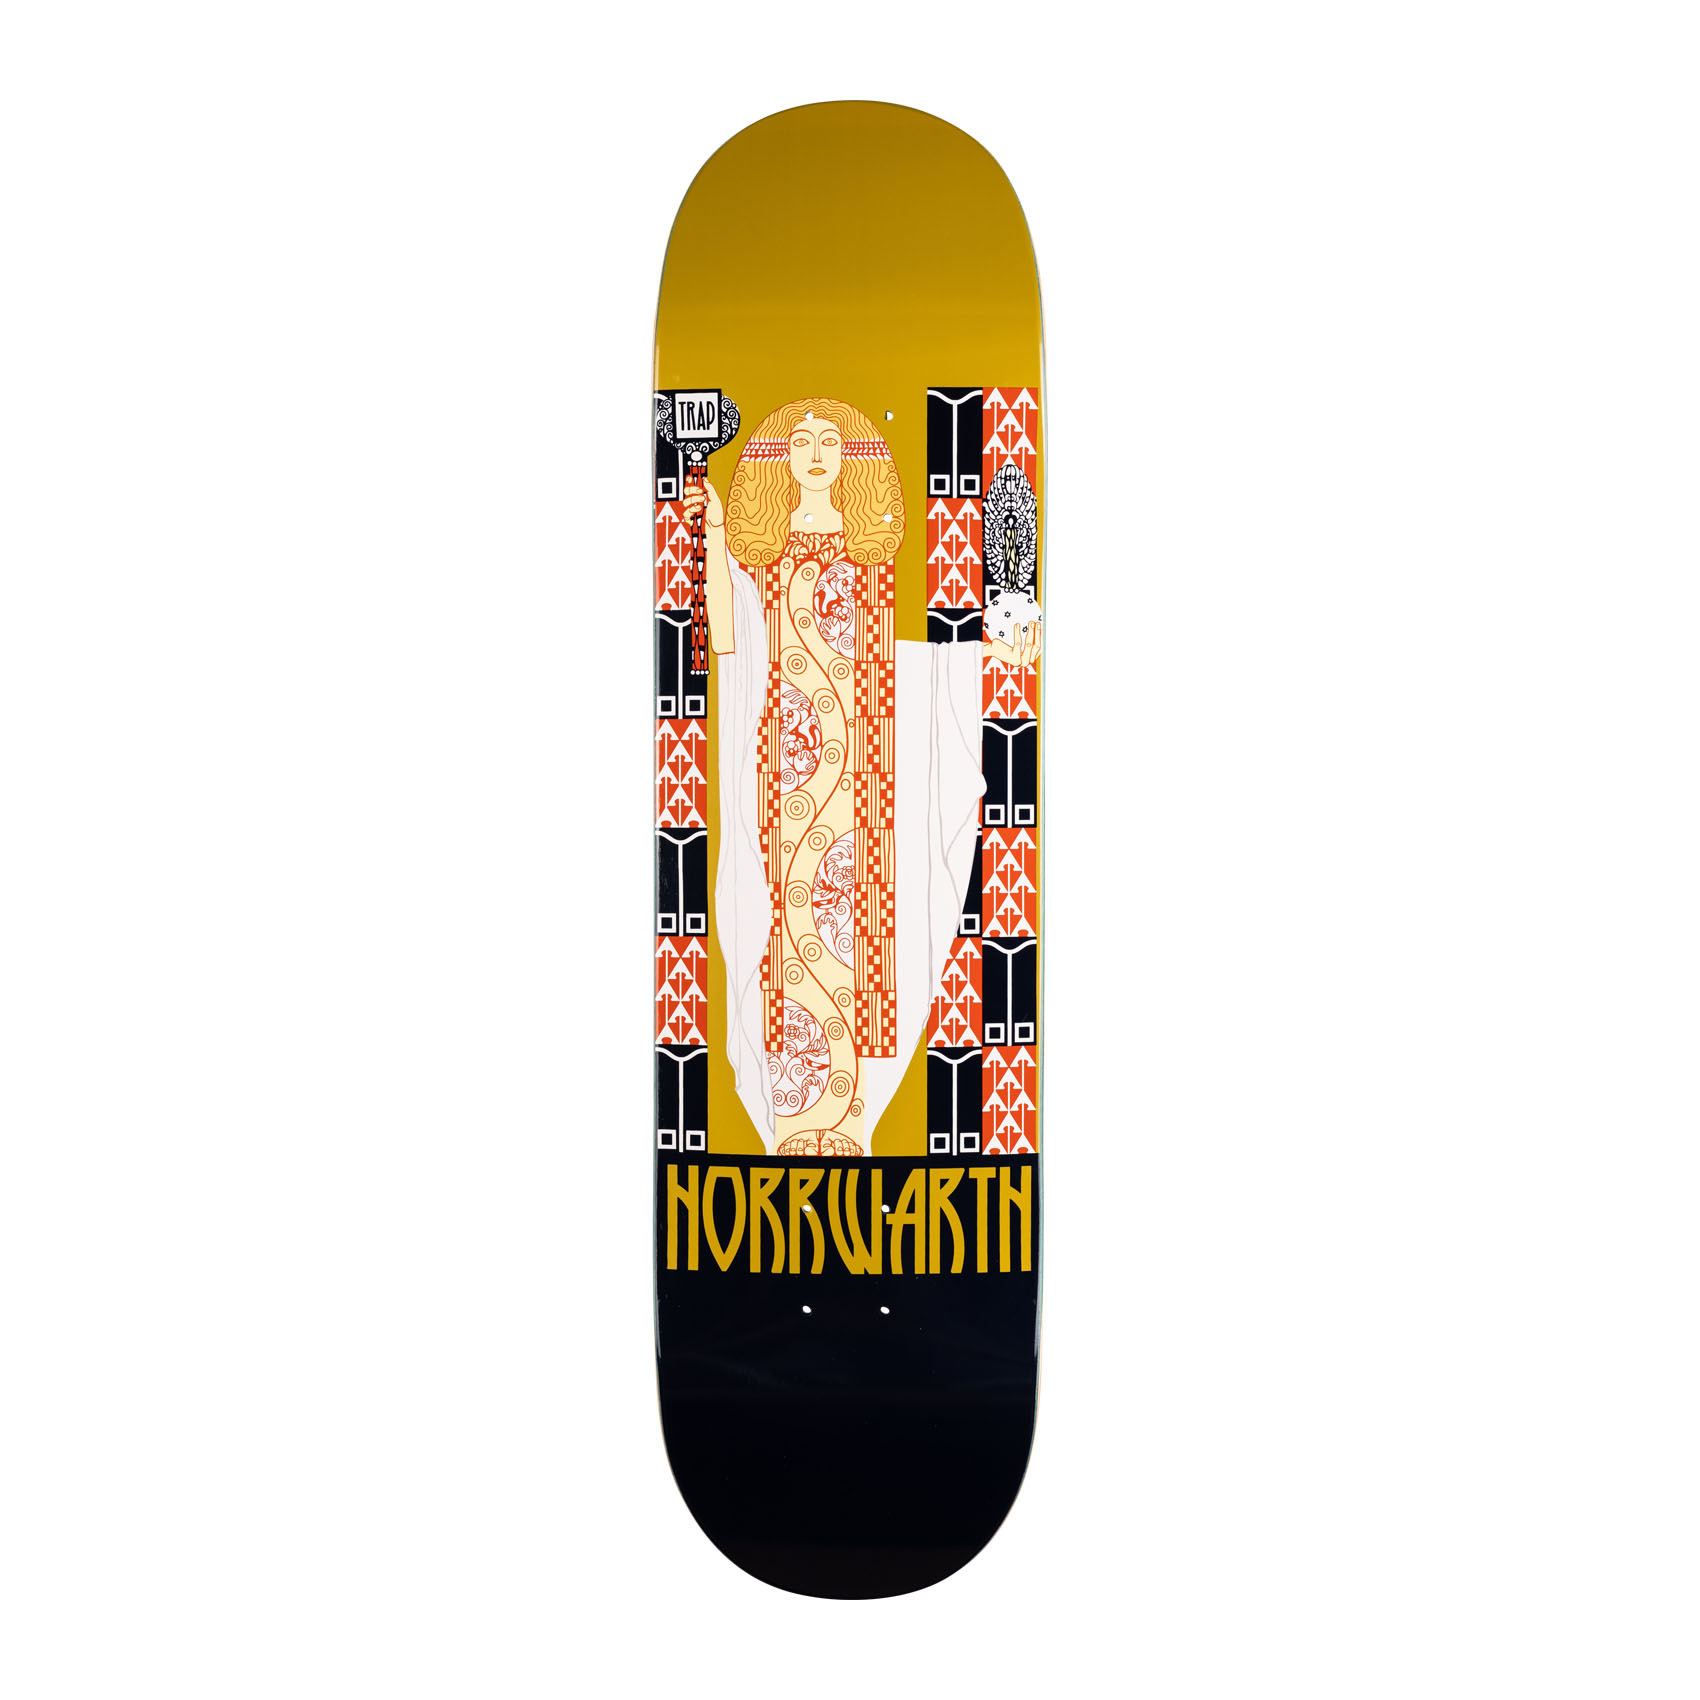 Trap Skateboard Deck Stil Horrwarth 8 25 Multi Ebay